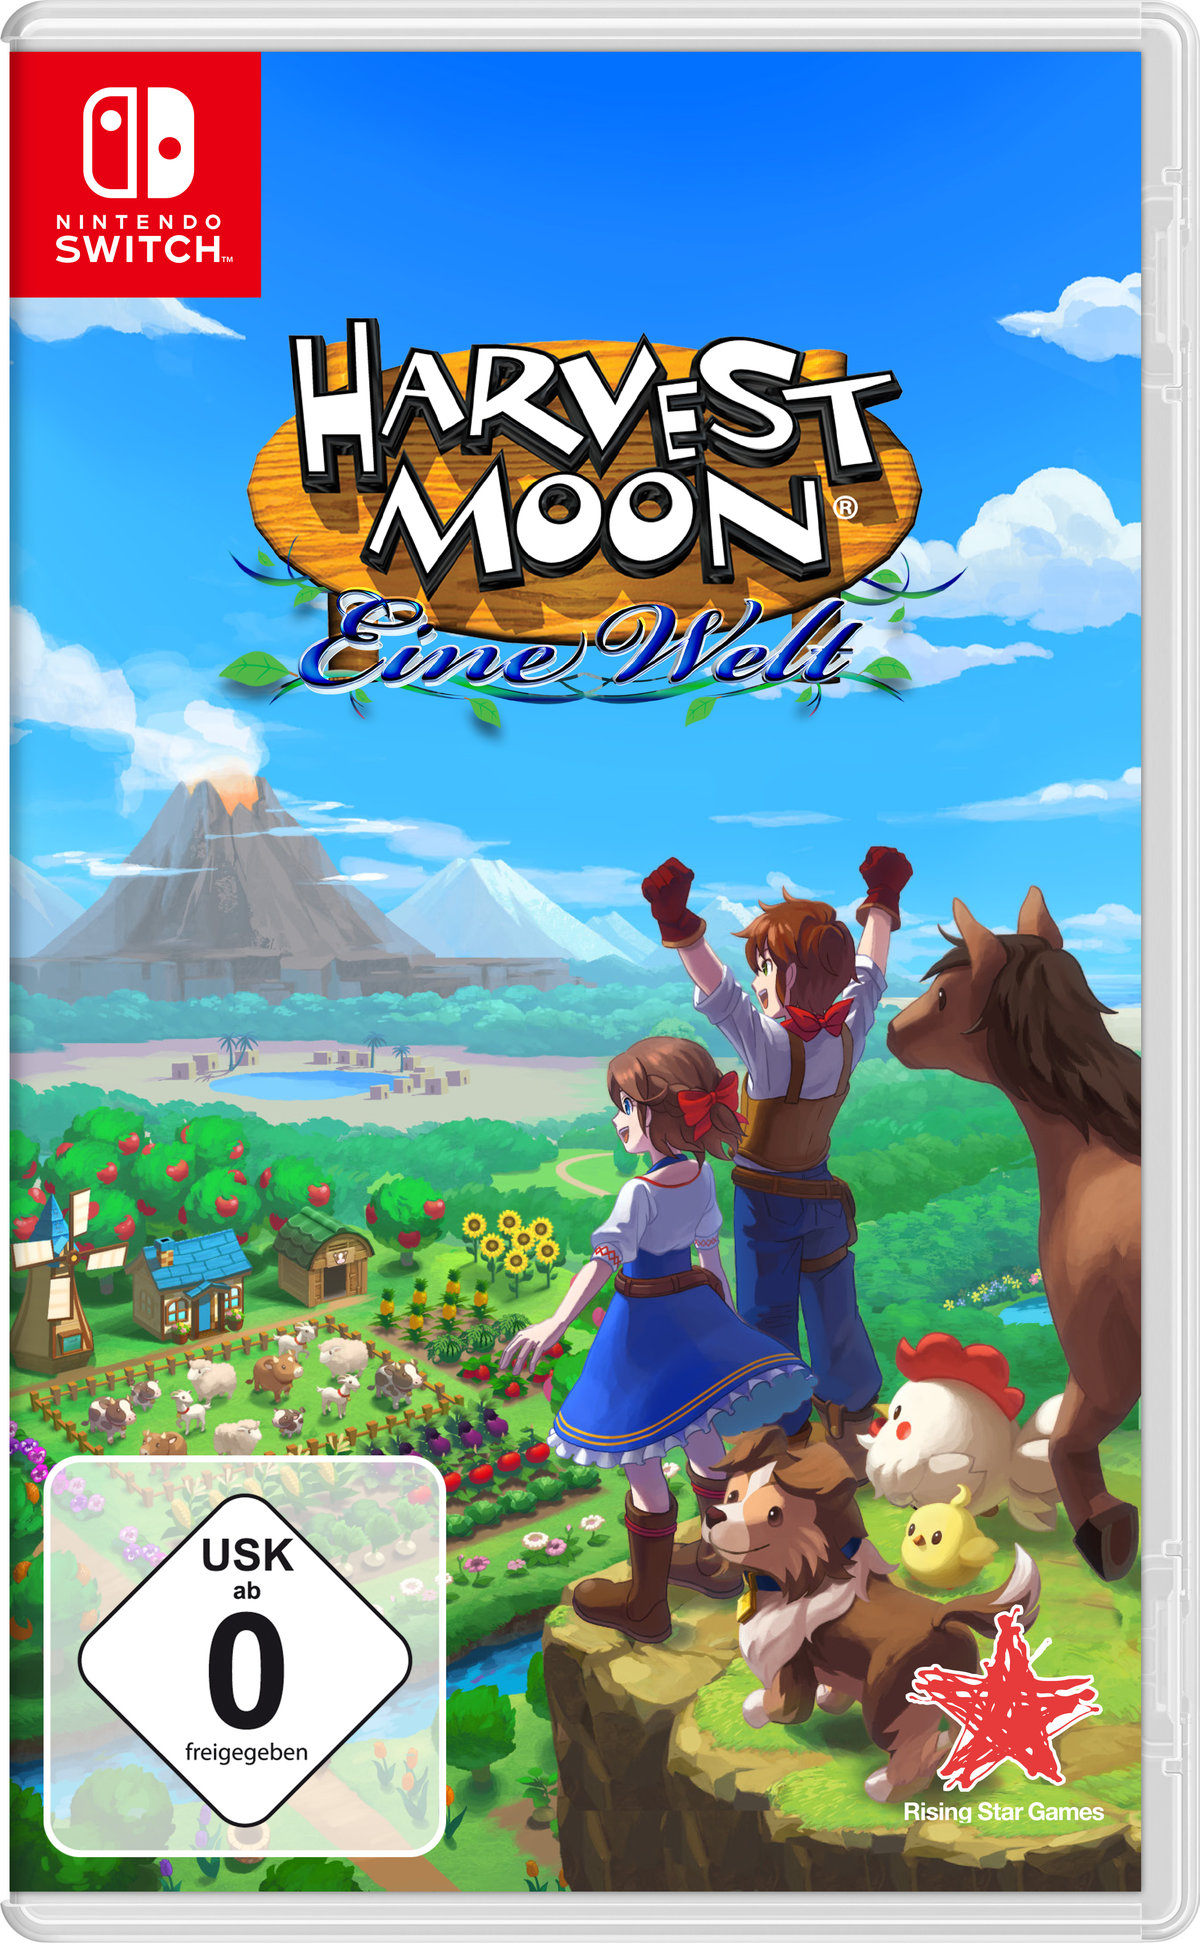 [Nintendo One Switch] Moon World Harvest -